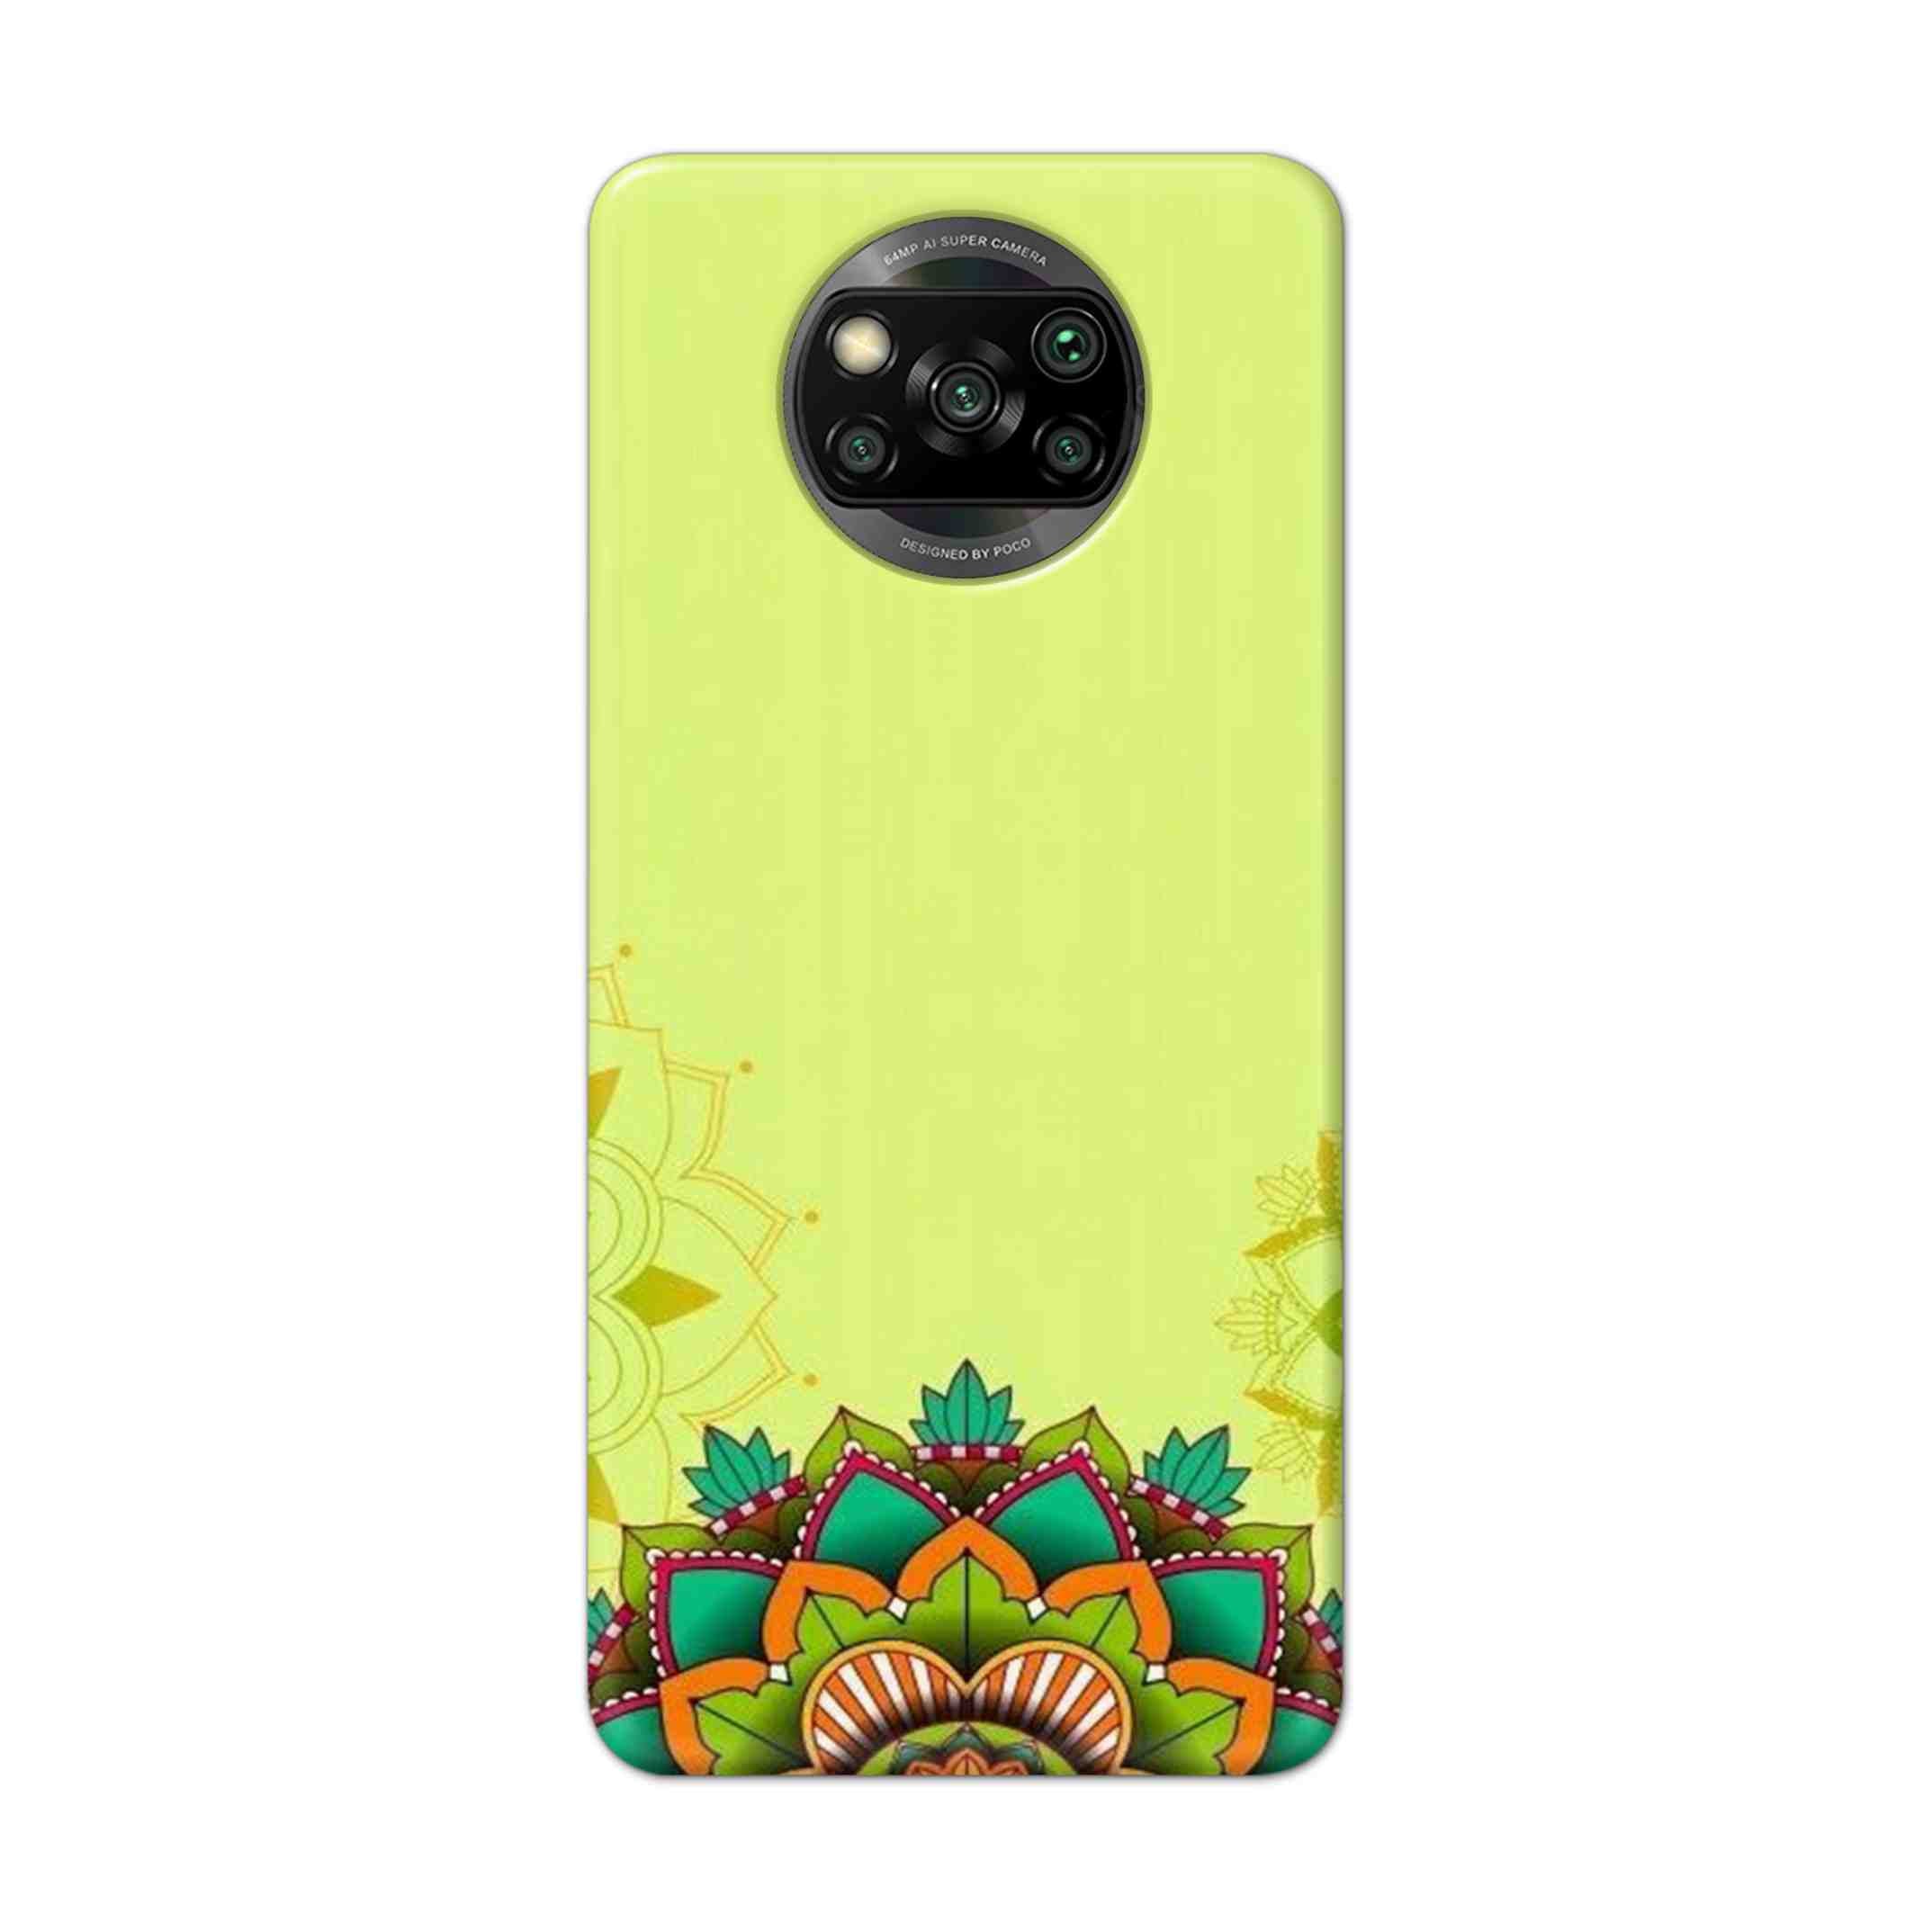 Buy Flower Mandala Hard Back Mobile Phone Case Cover For Pcoc X3 NFC Online